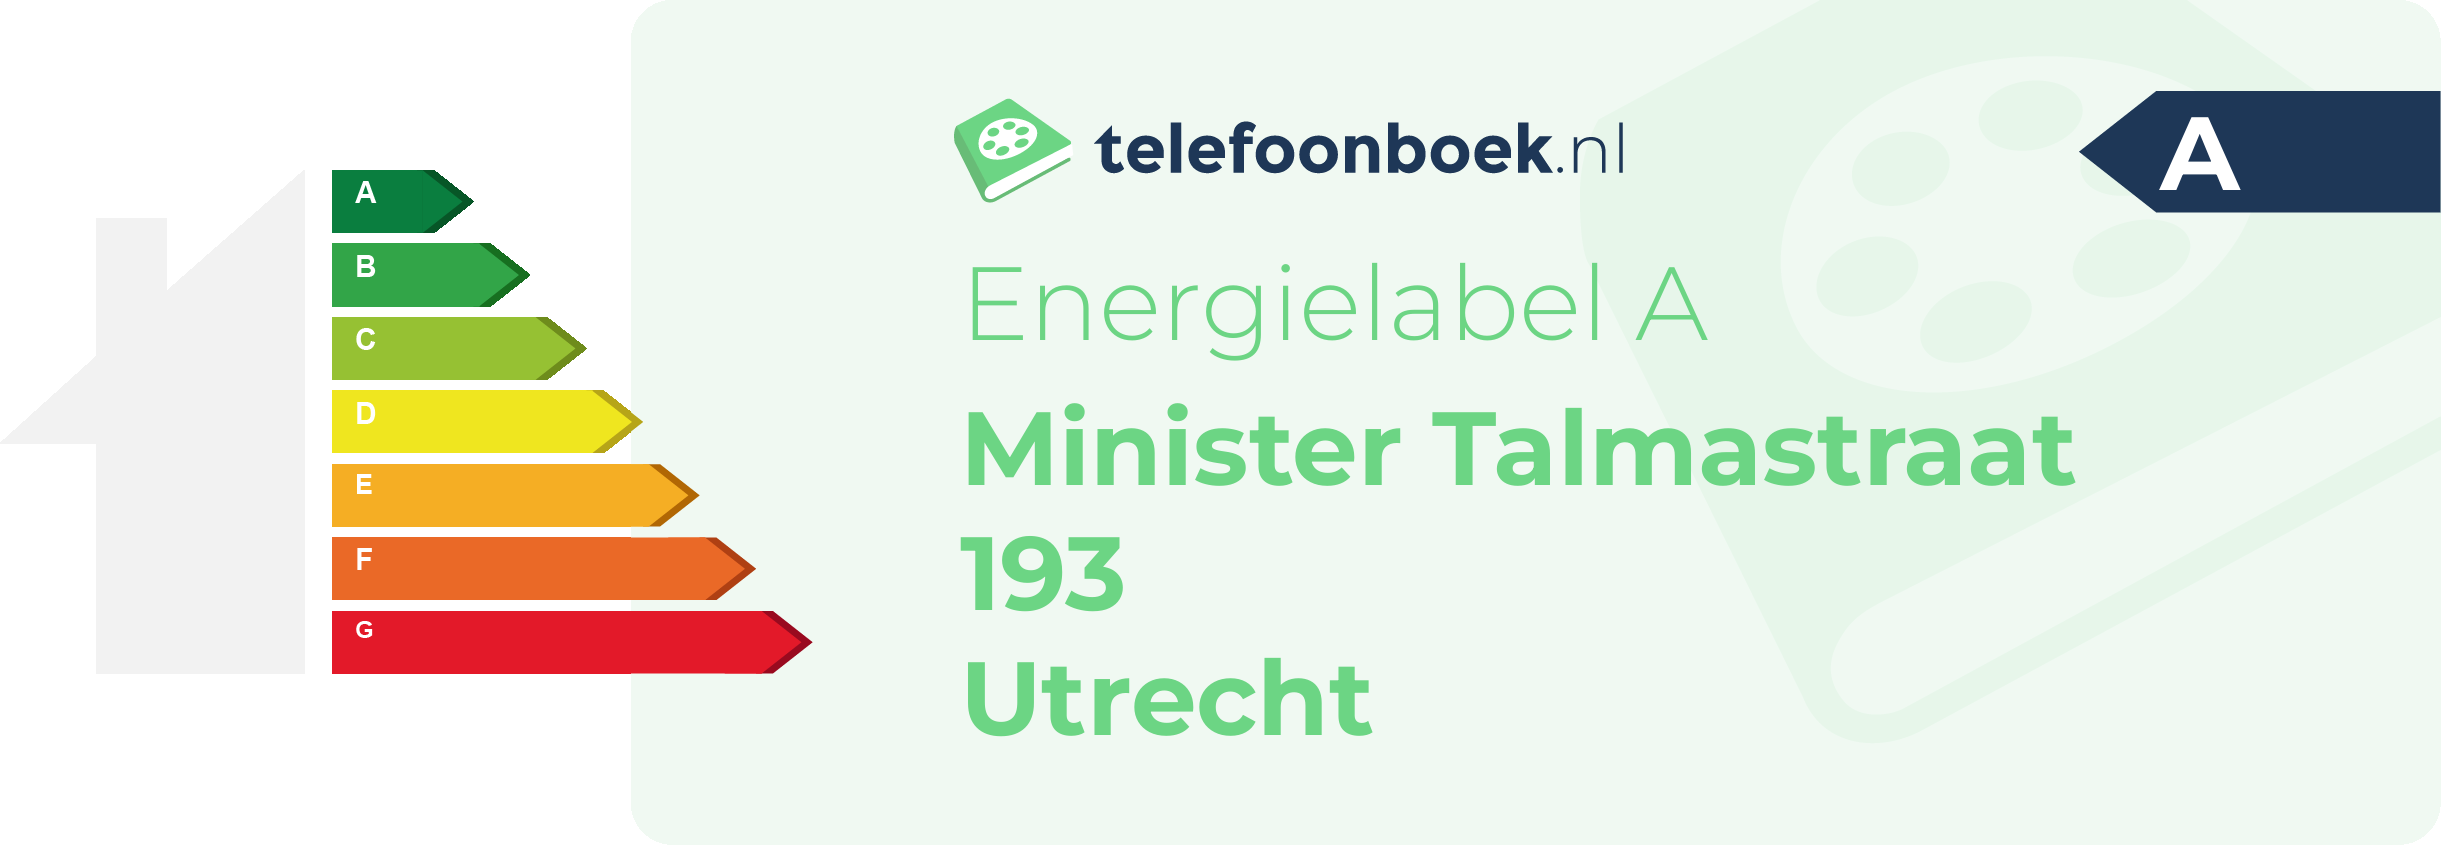 Energielabel Minister Talmastraat 193 Utrecht